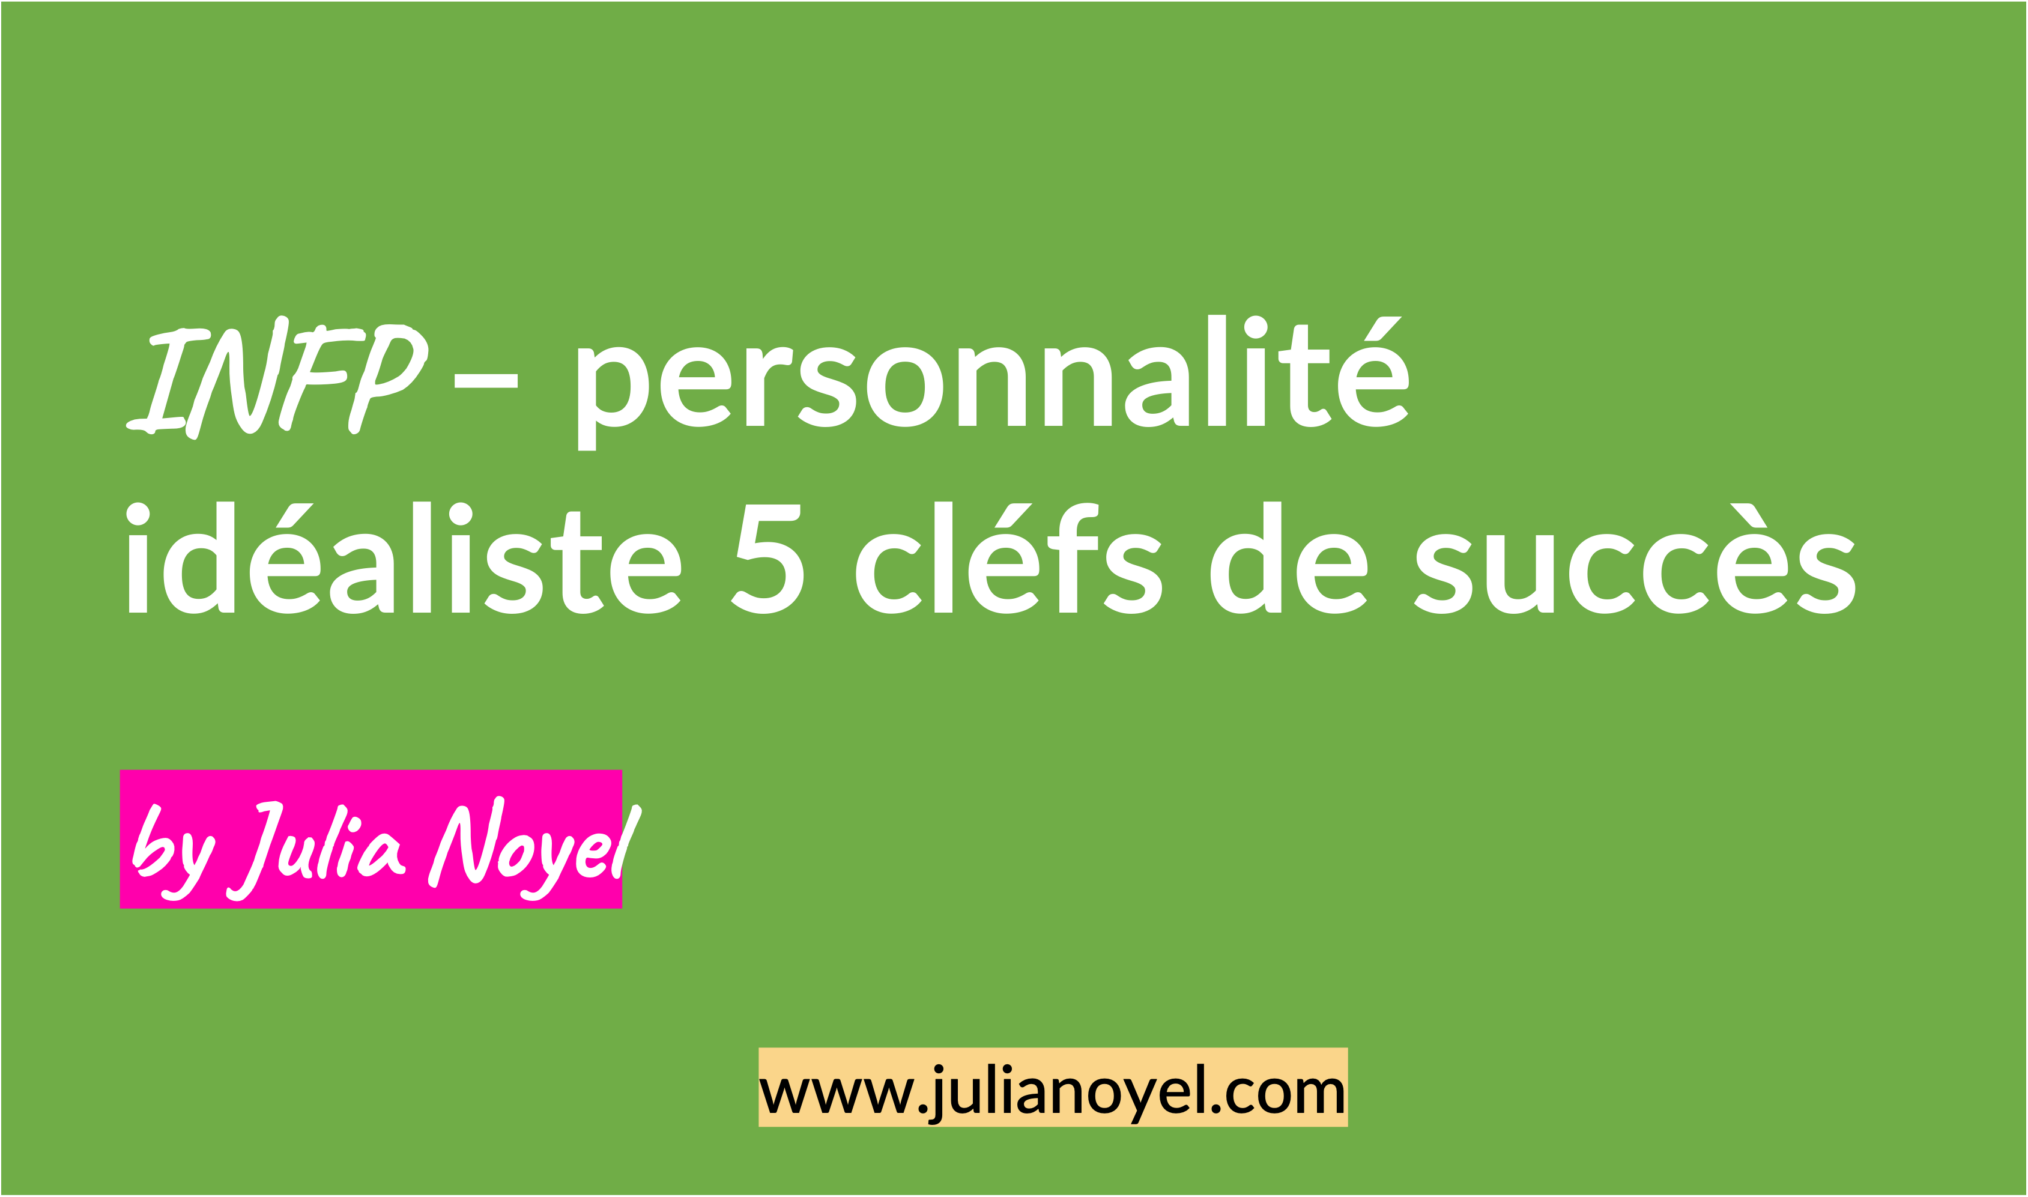 INFP – personnalité idéaliste 5 cléfs de succès by Julia Noyel